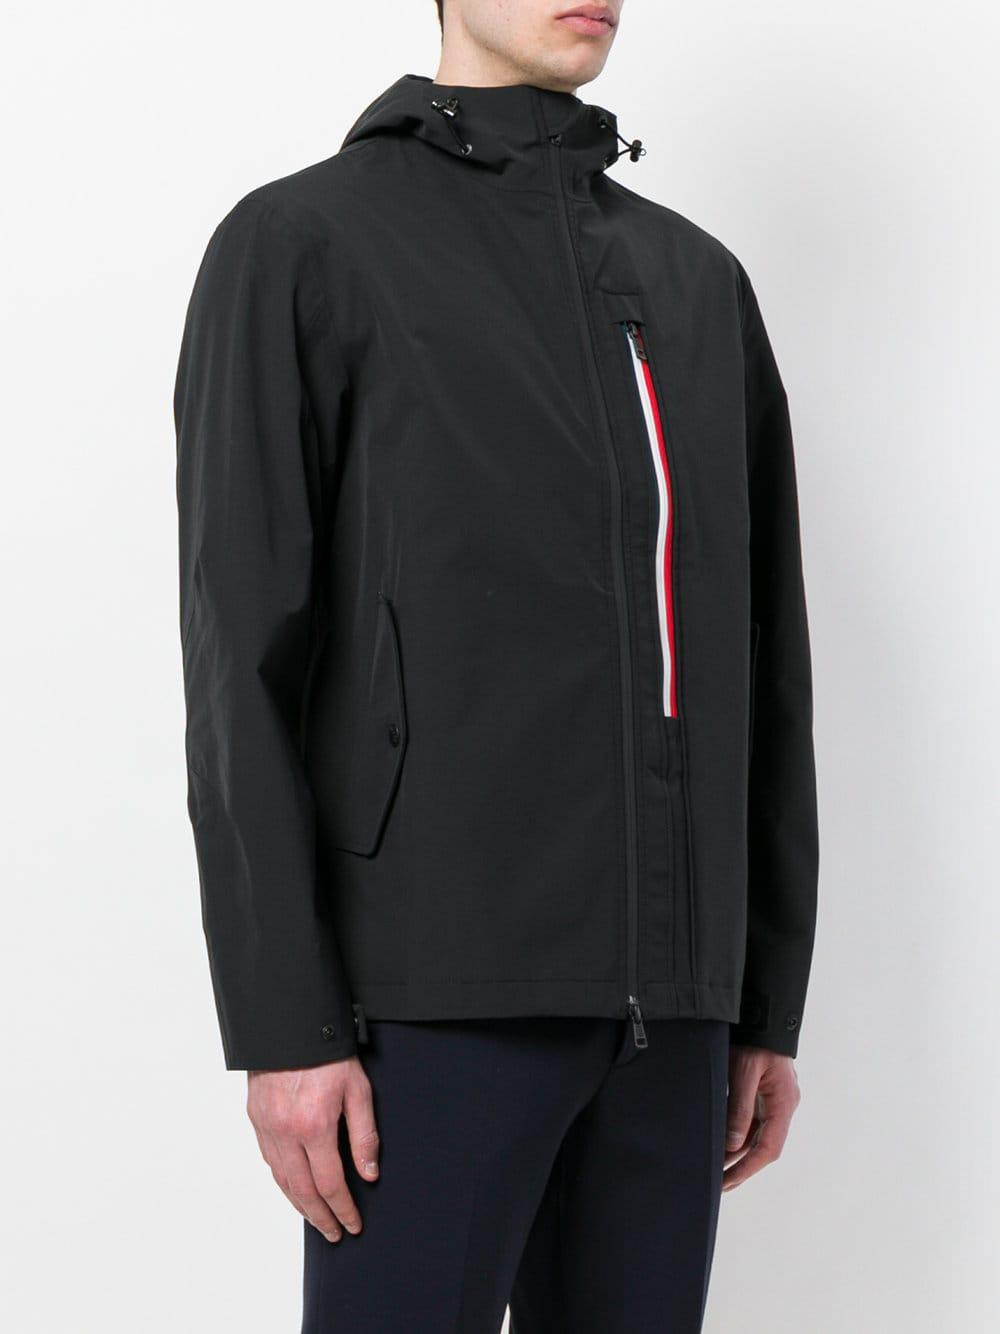 Moncler Cotton Brandon Giubotto Puffer Jacket in Black for Men - Lyst